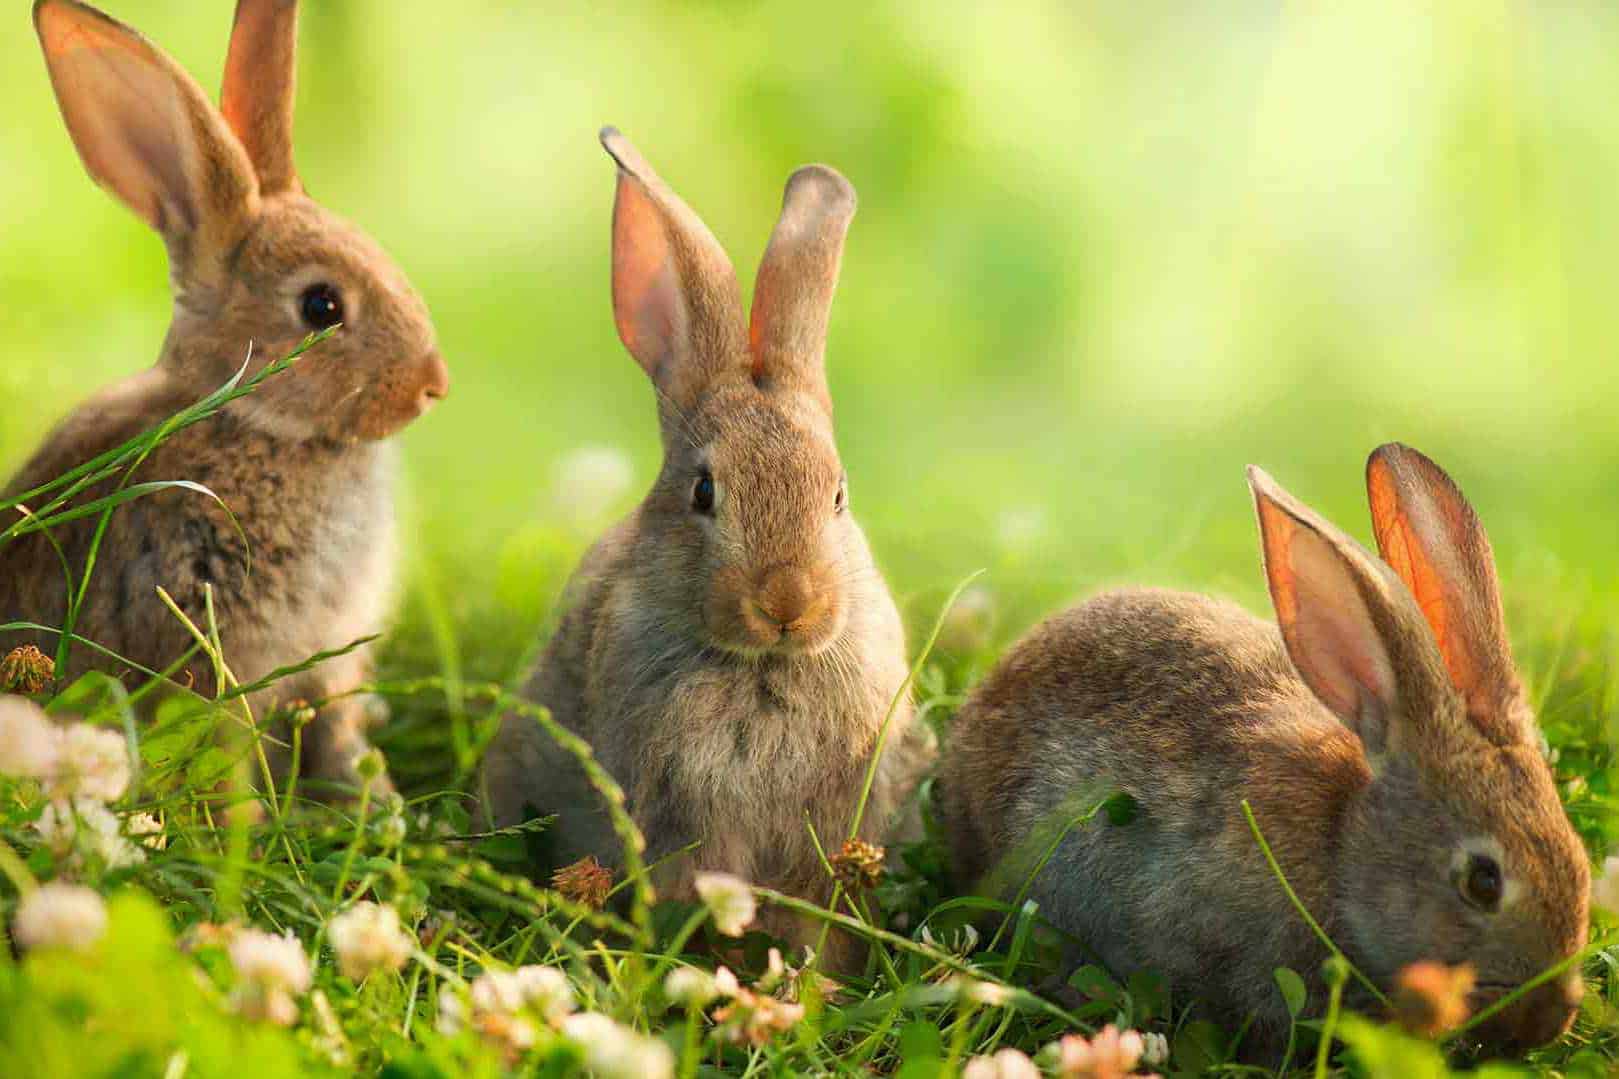 What Do Wild Baby Rabbits Eat